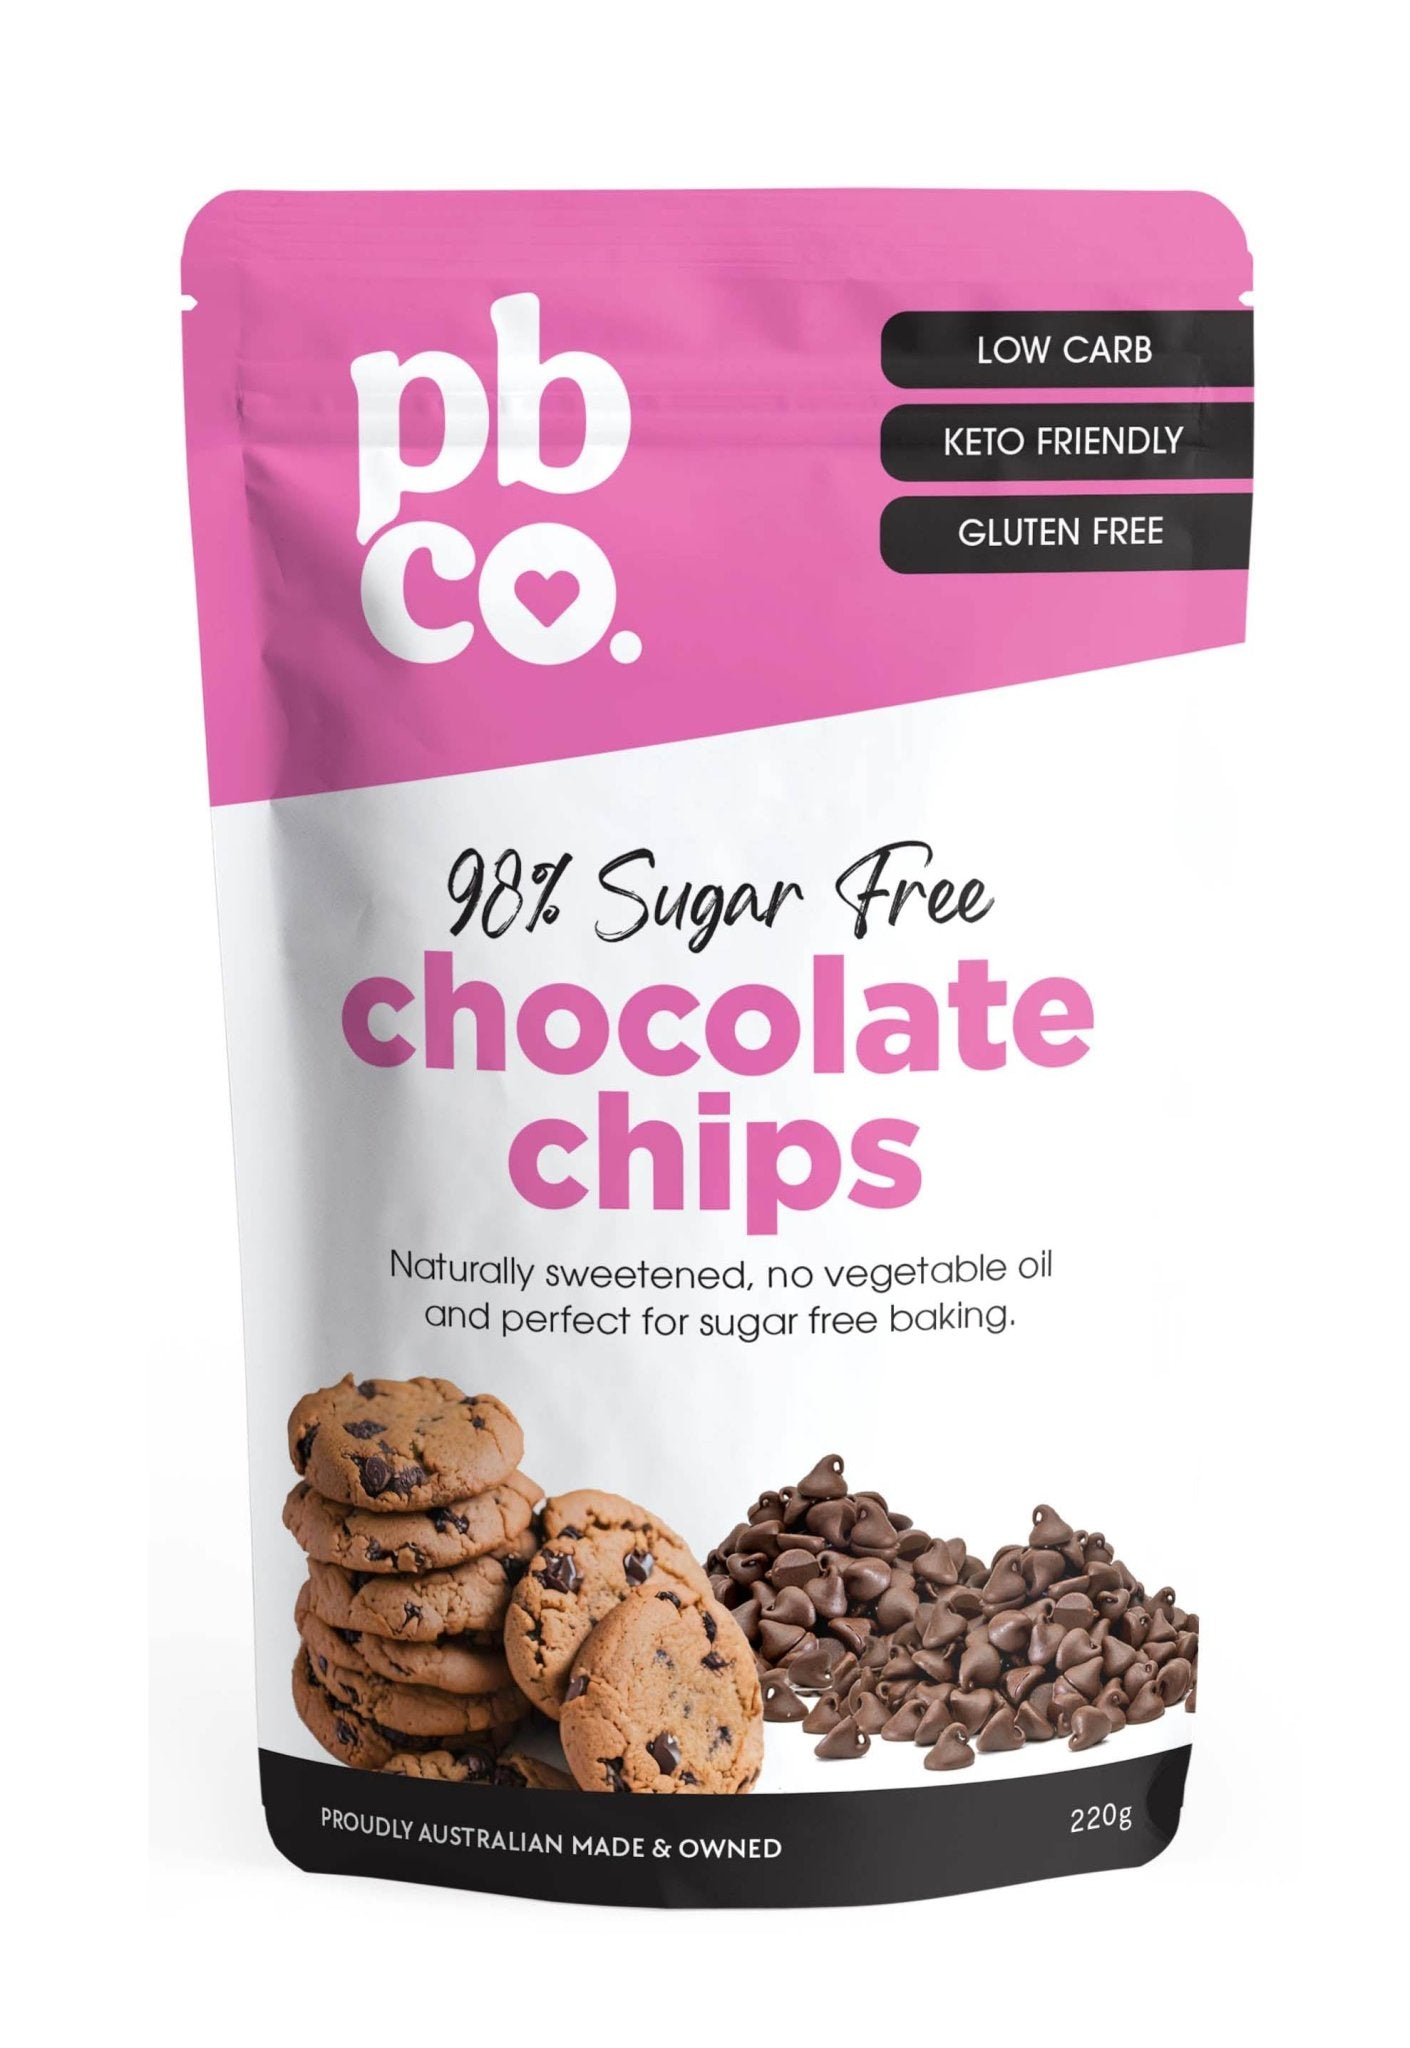 Sugar Free Choc Chips - 220g - Low carb & sugar free Pantry Staples - Just $8.95! Shop now at PBCo.